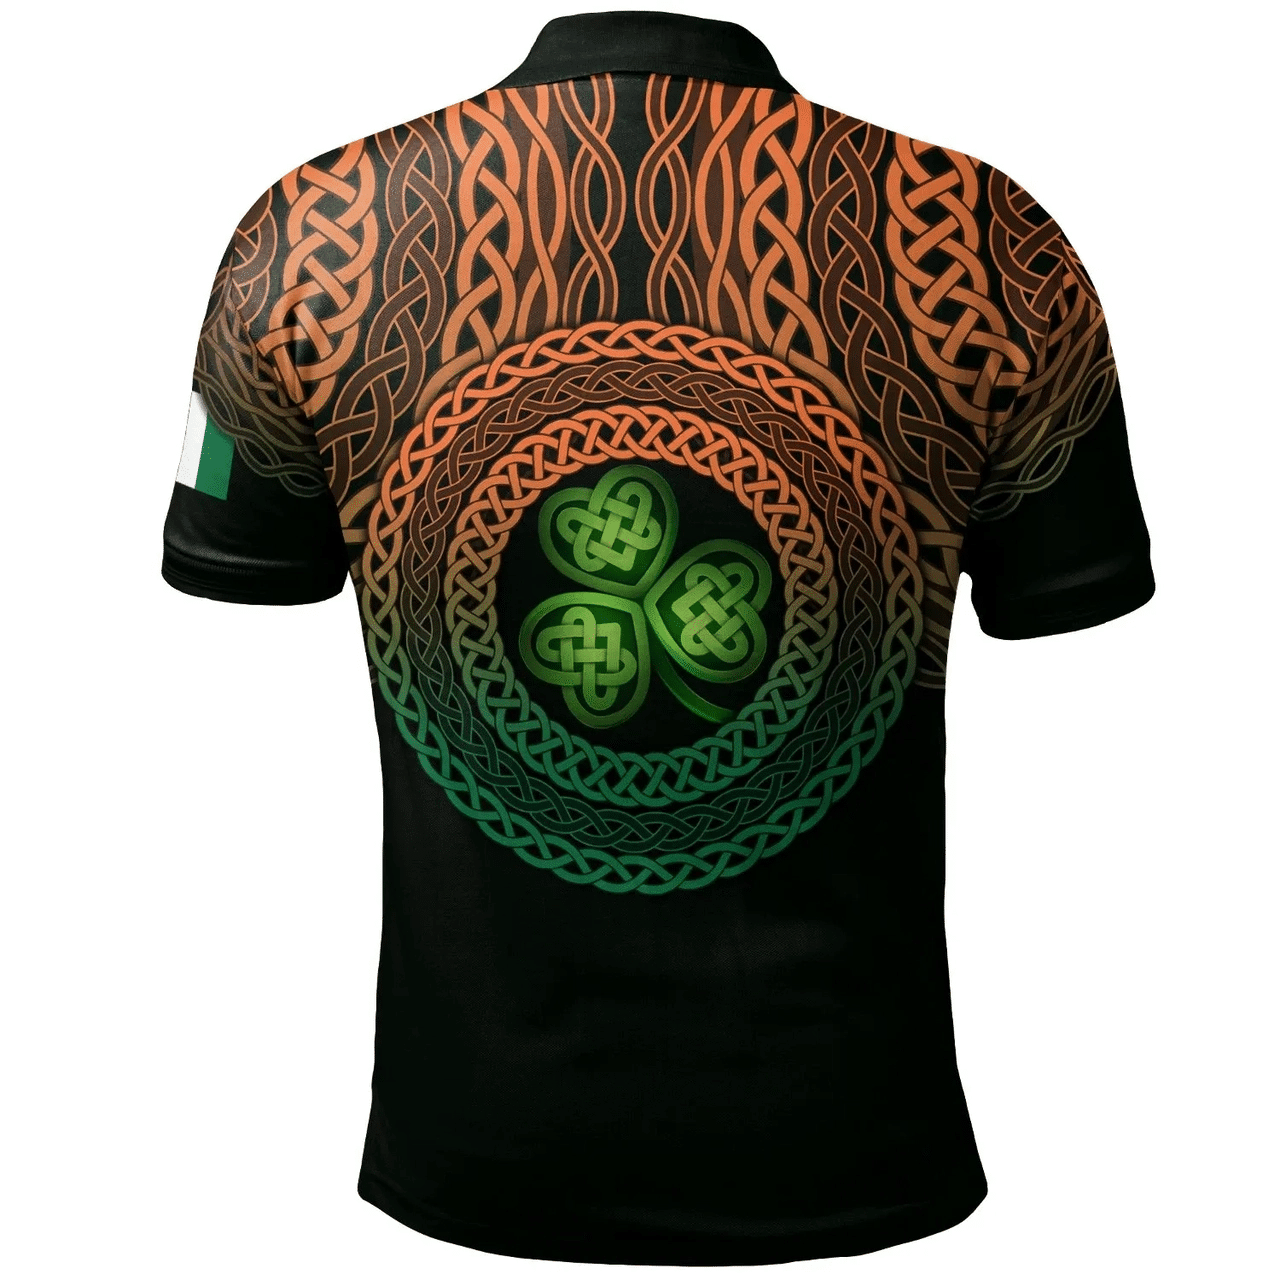 1stIreland Ireland Polo Shirt - Comerford Irish Family Crest Polo Shirt - Celtic Pride A7 | 1stIreland.com